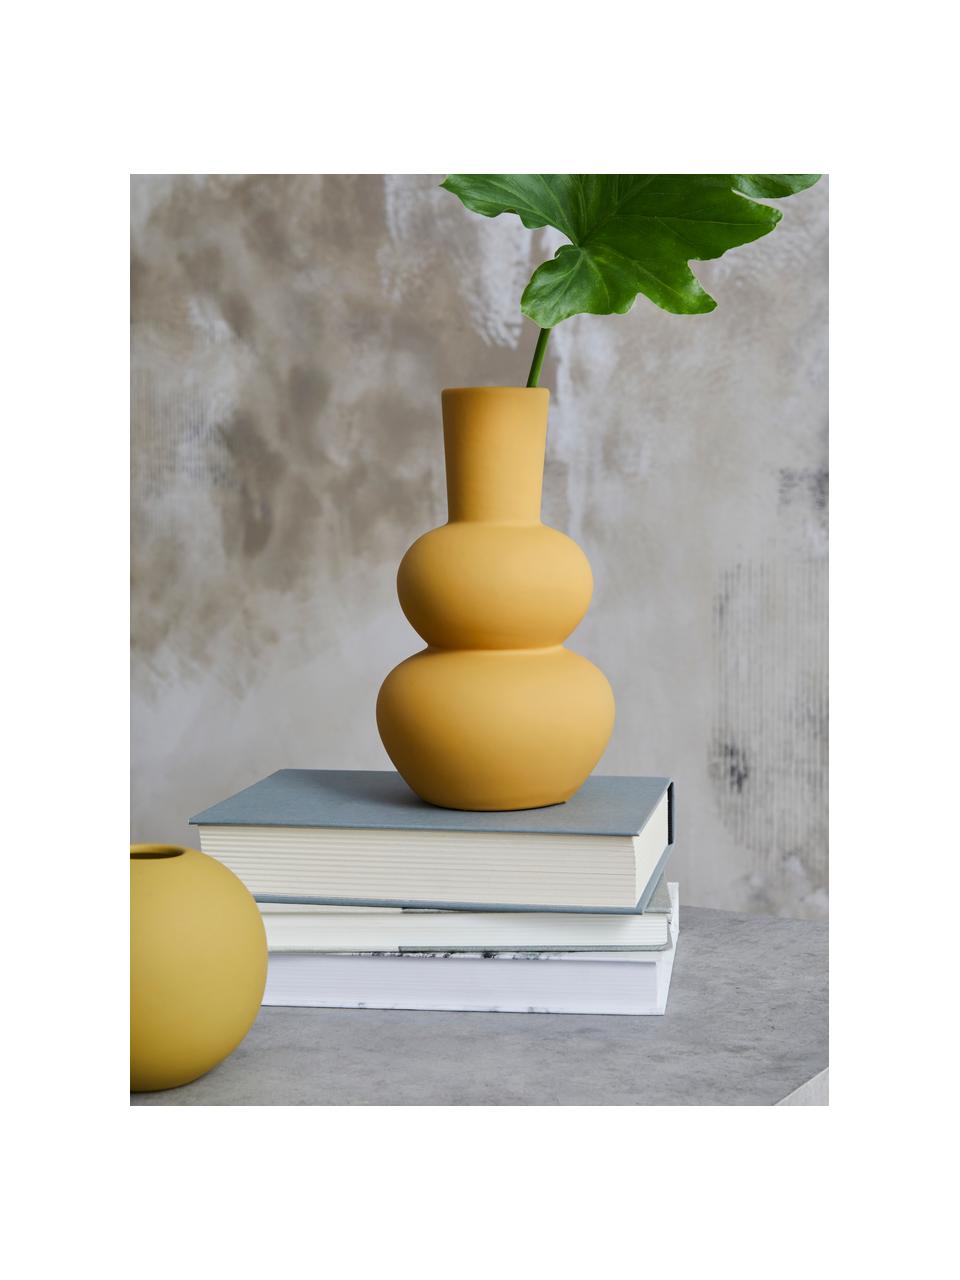 Design-Vase Eathan, Steingut, Ockergelb, Ø 11 x H 20 cm